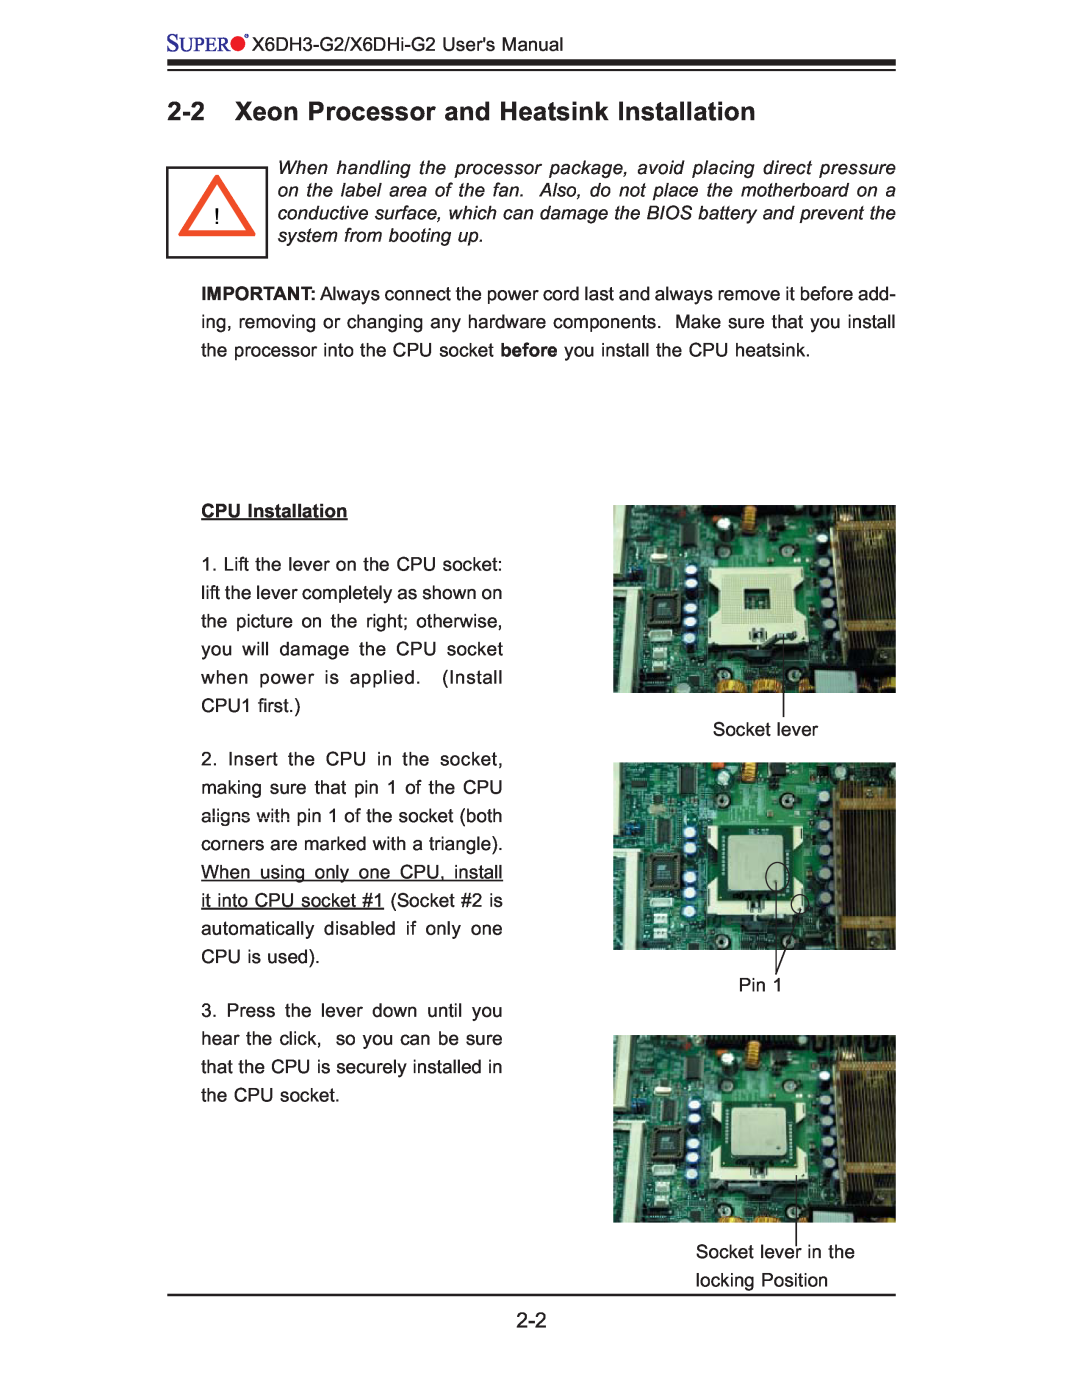 SUPER MICRO Computer X6DHi-G2, X6DH3-G2 user manual Xeon Processor and Heatsink Installation, CPU Installation 